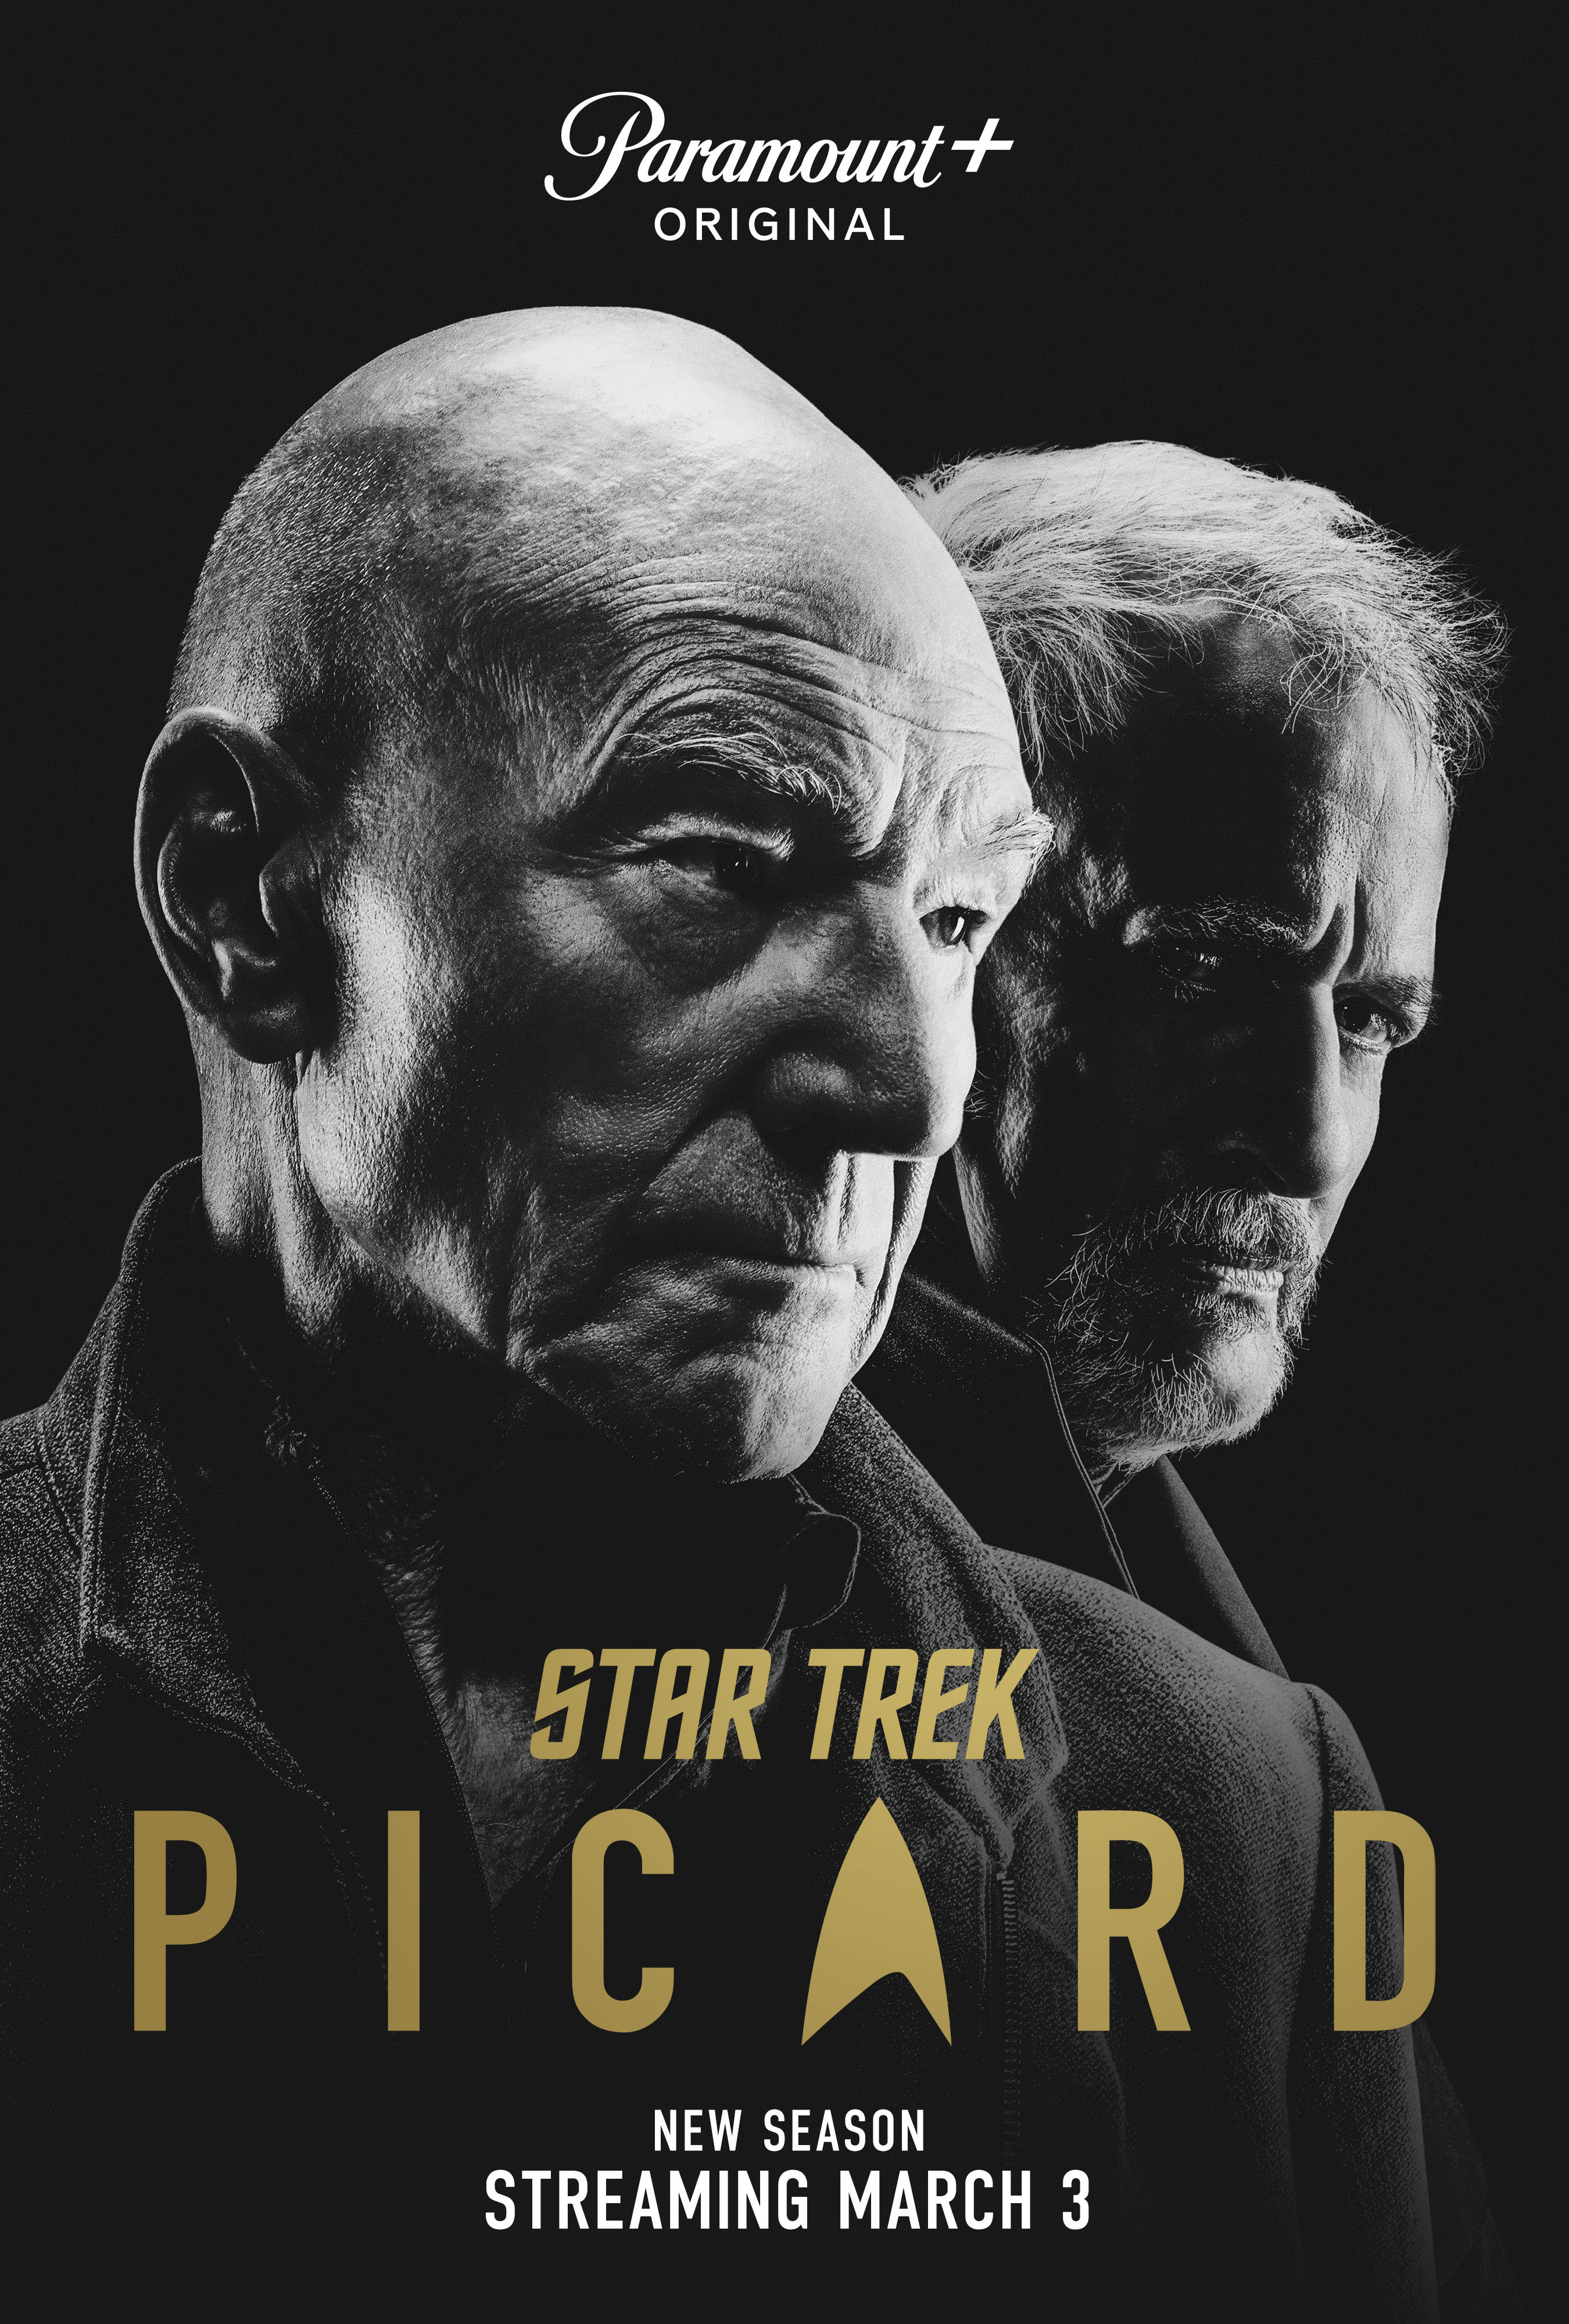 Star Trek Picard Poster Wallpapers